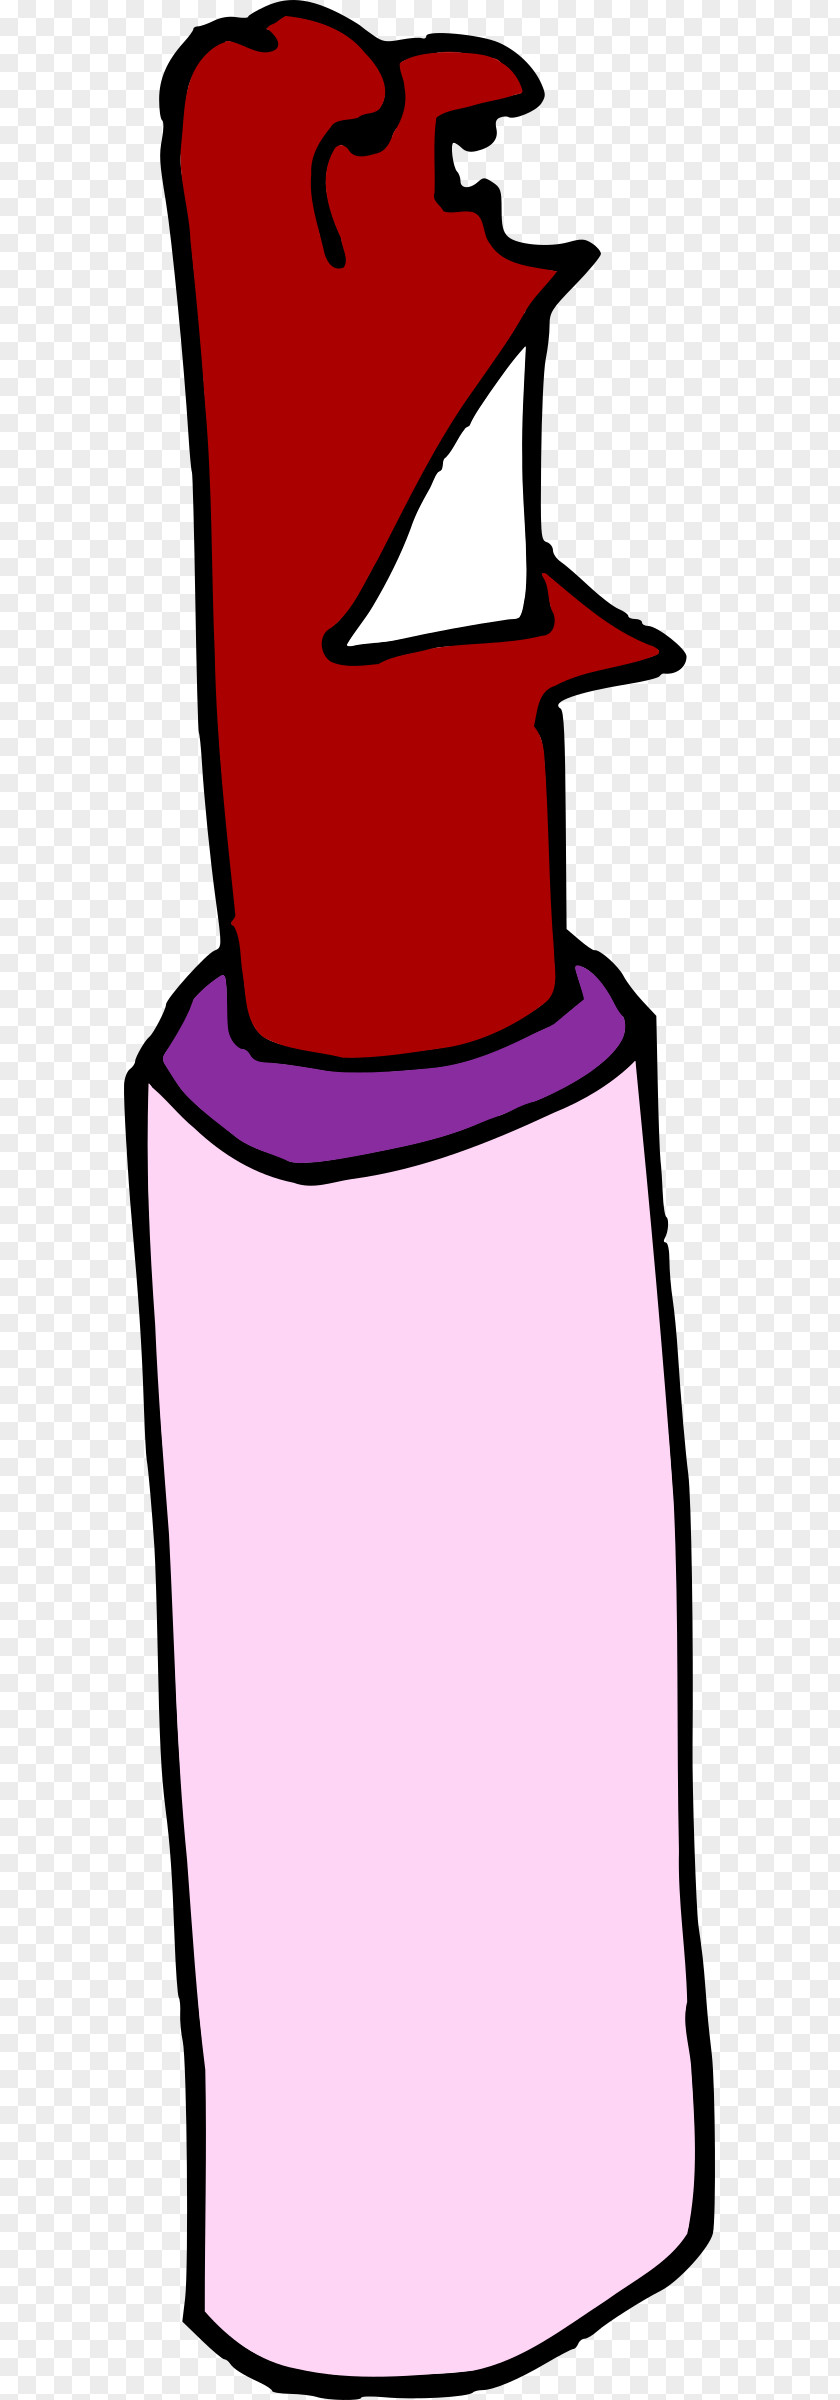 Lipstick Clip Art Image Illustration Cosmetics PNG